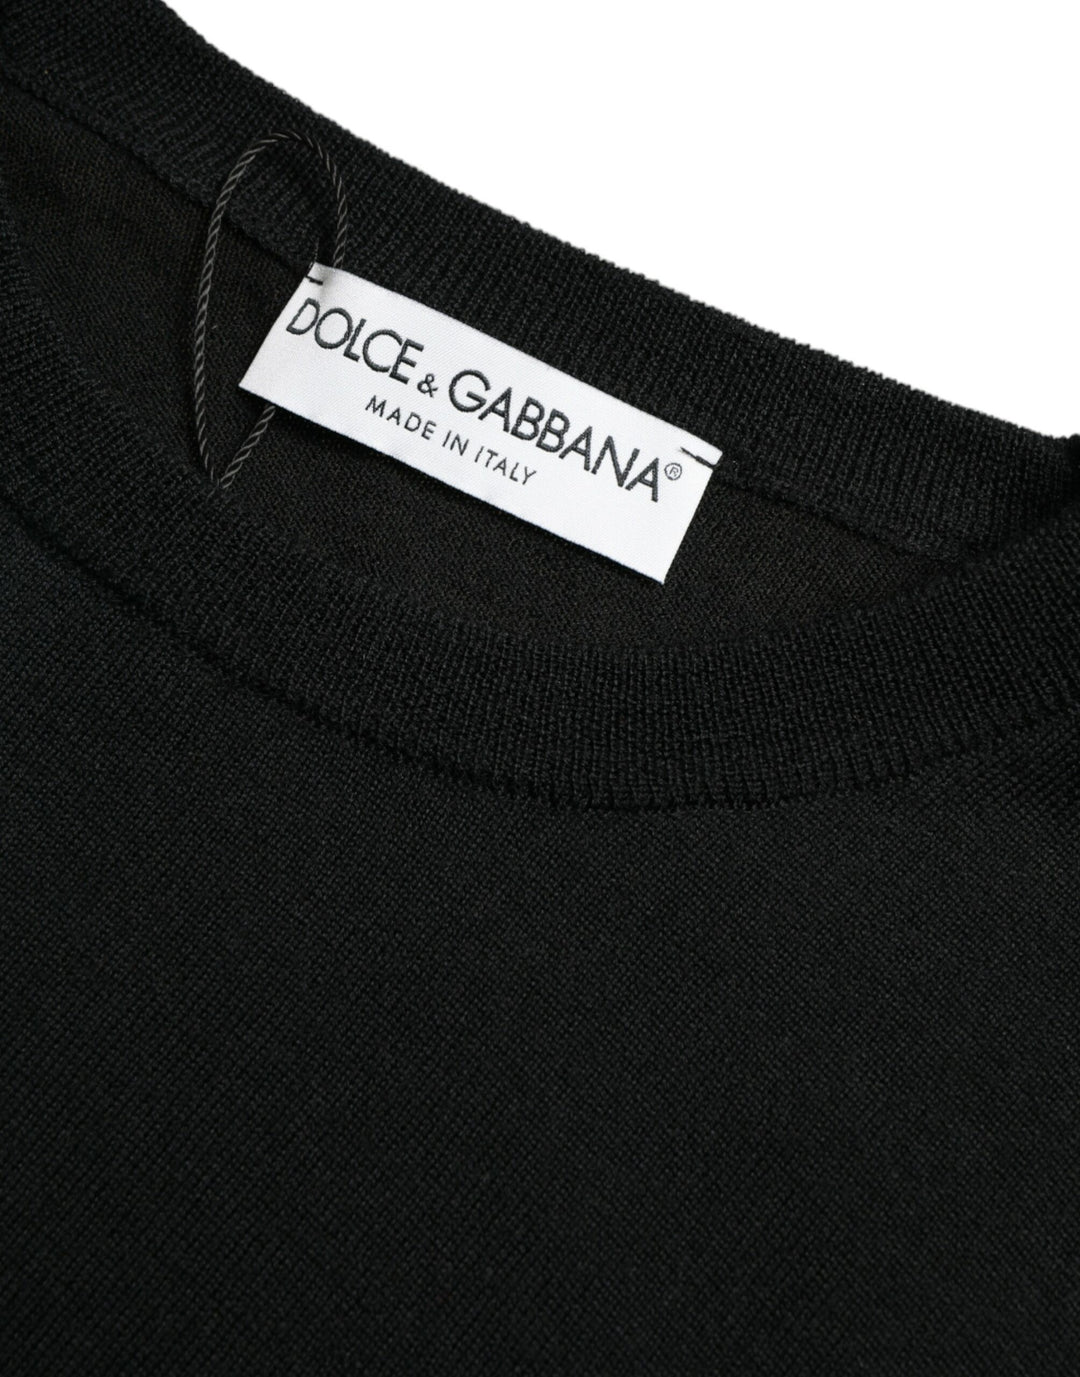 Dolce & Gabbana Stunning Black Wool Sweater